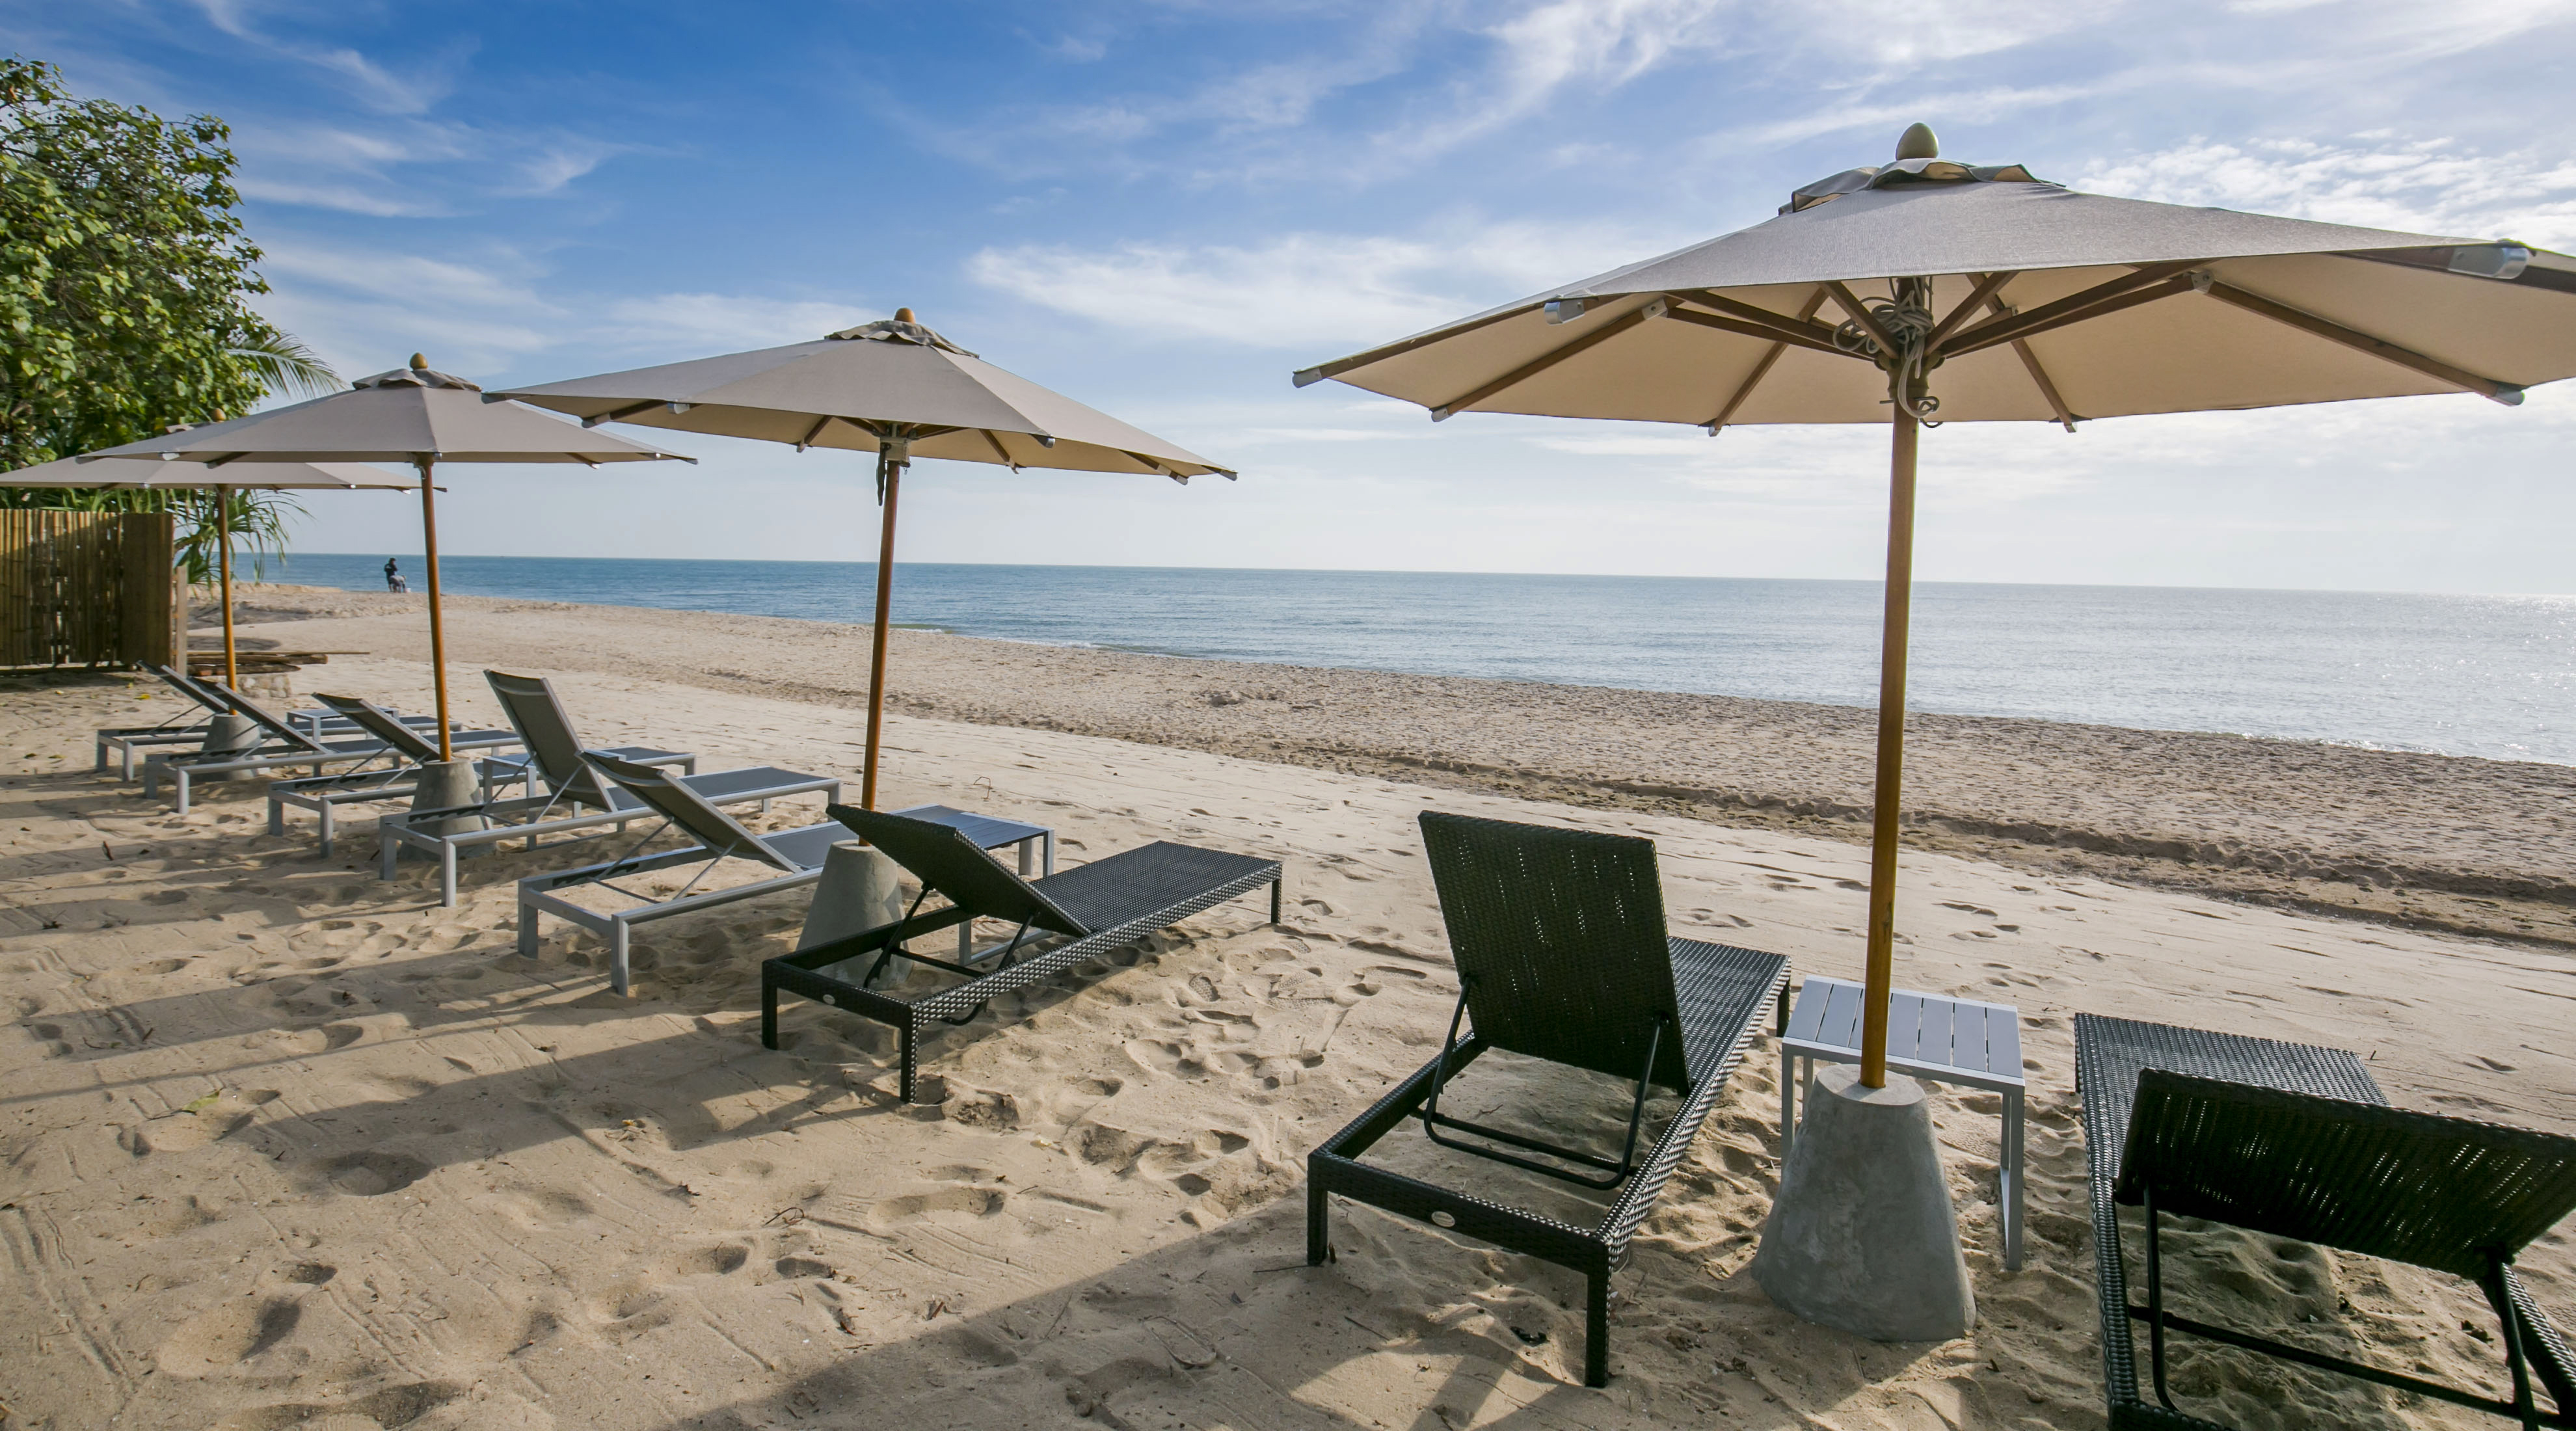 Foto af Q Seaside Huahin Beach - populært sted blandt afslapningskendere